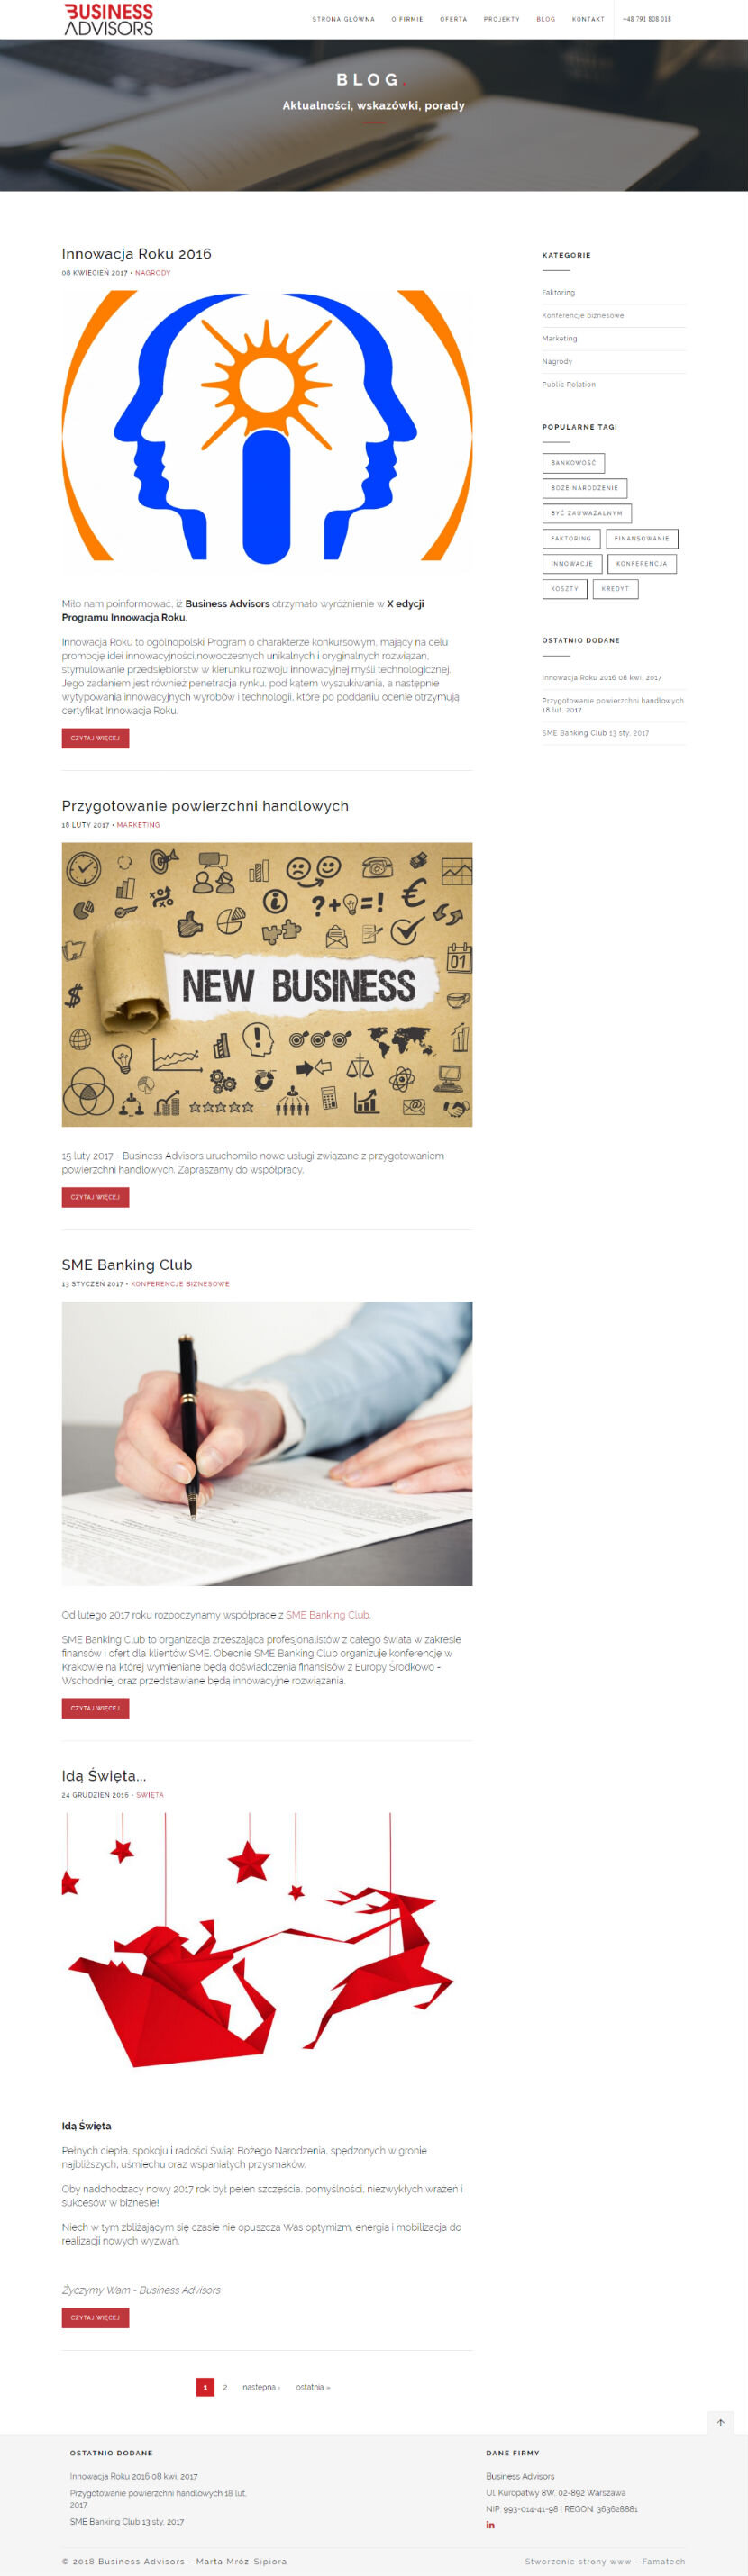 Business Advisors - blog firmowy